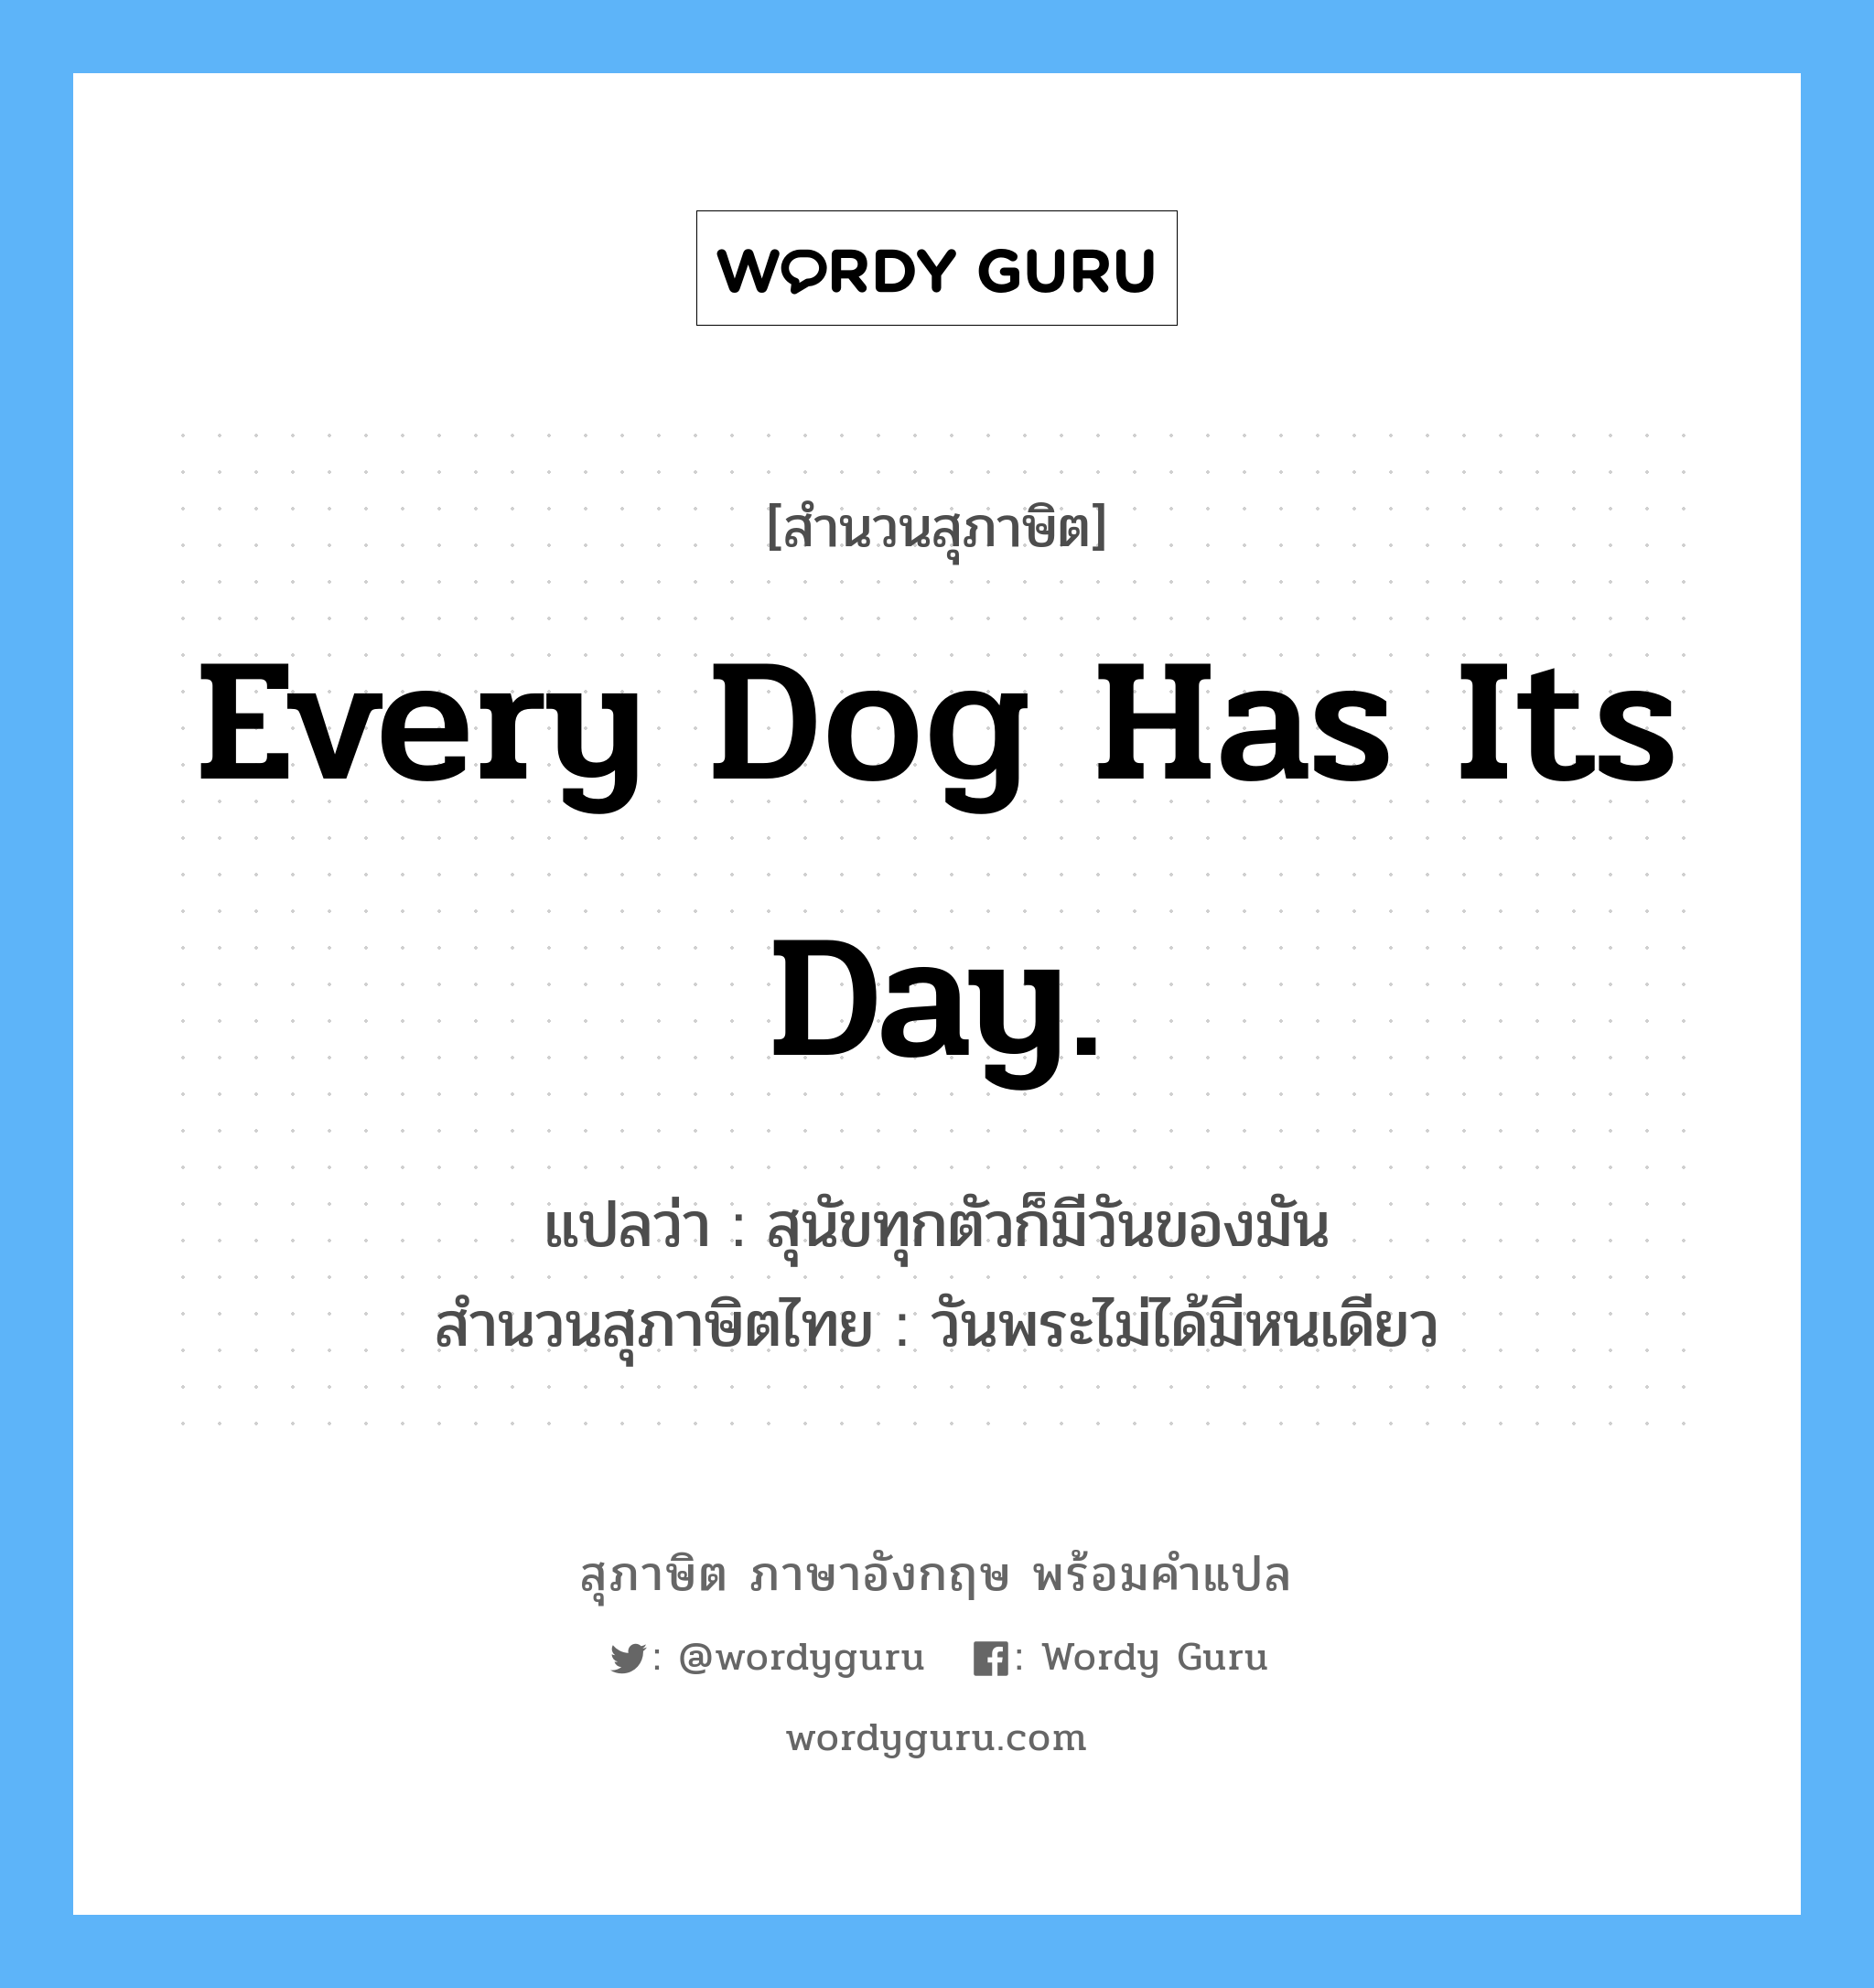 Every dog has its day. แปลว่า?, สำนวนสุภาษิต ภาษาอังกฤษ Every dog has its day. แปลว่า สุนัขทุกตัวก็มีวันของมัน สำนวนสุภาษิตไทย วันพระไม่ได้มีหนเดียว